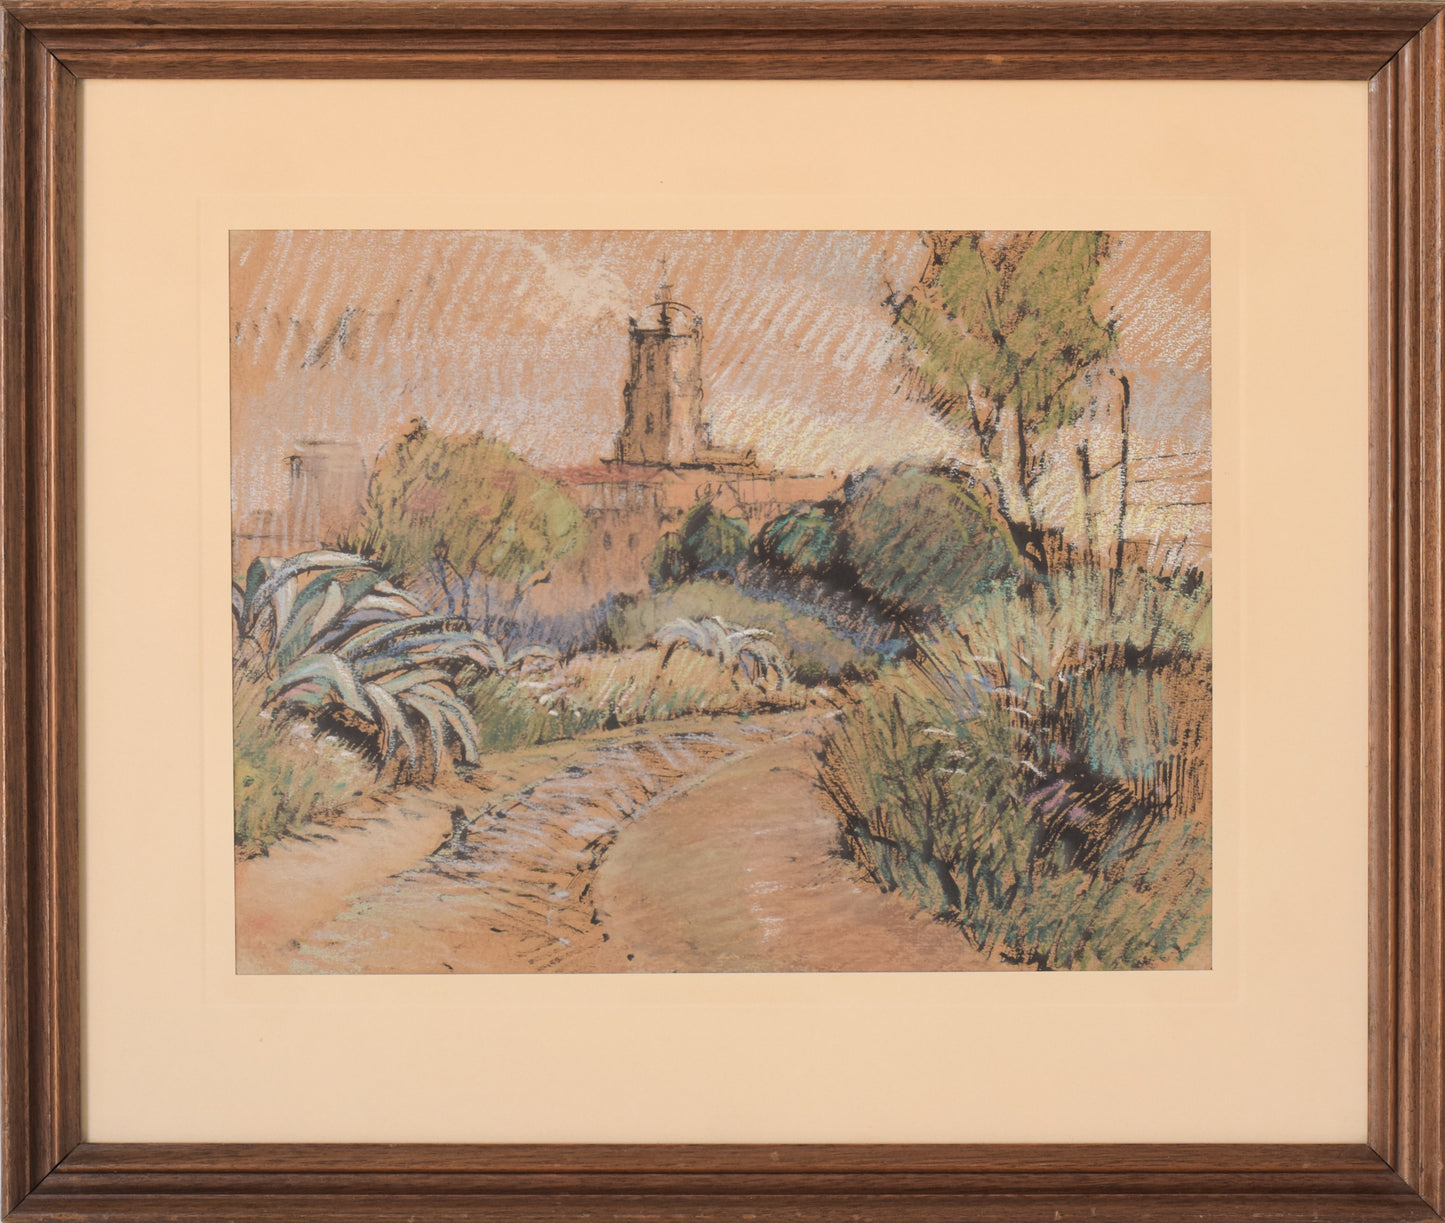 Post Impressionist Sketch of a Church in a Landscape